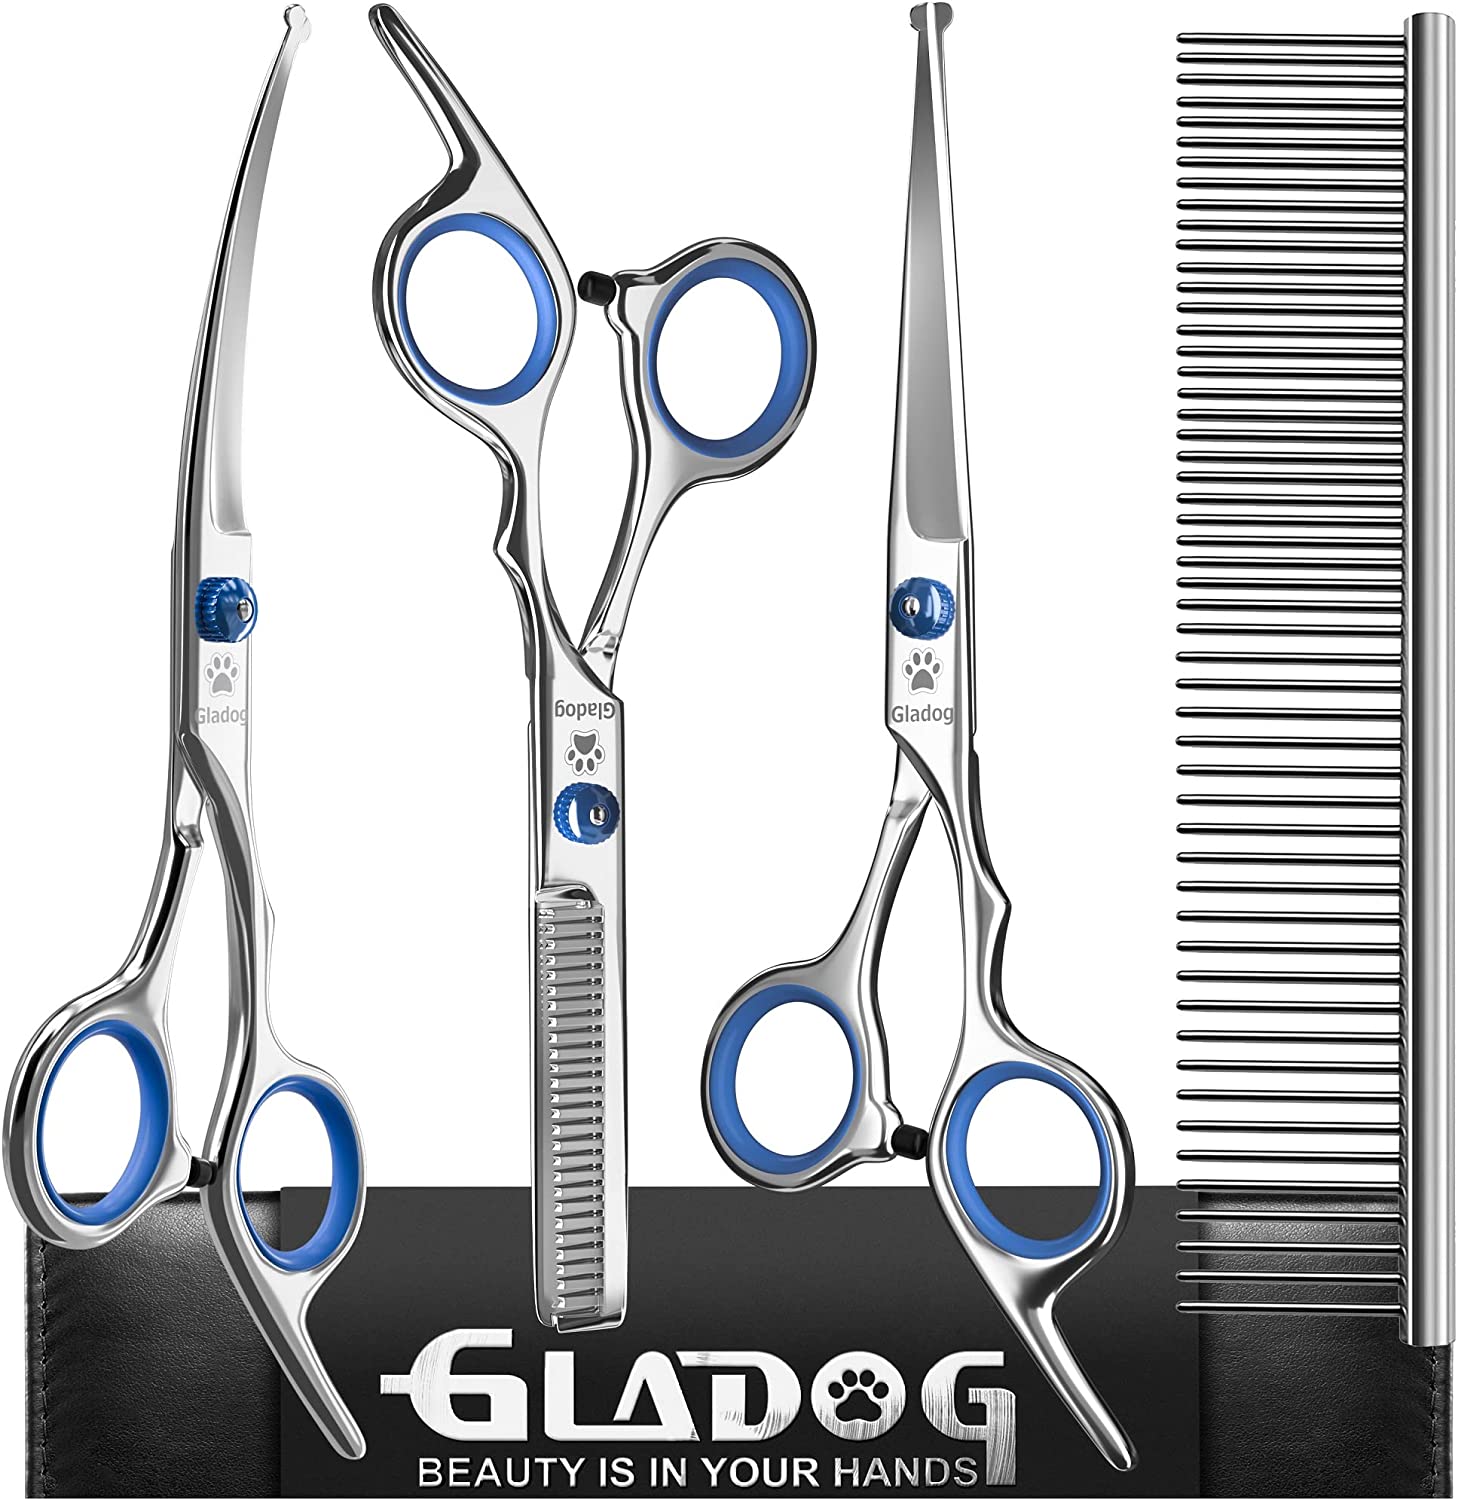 GLADOG Professional Grooming Scissors 